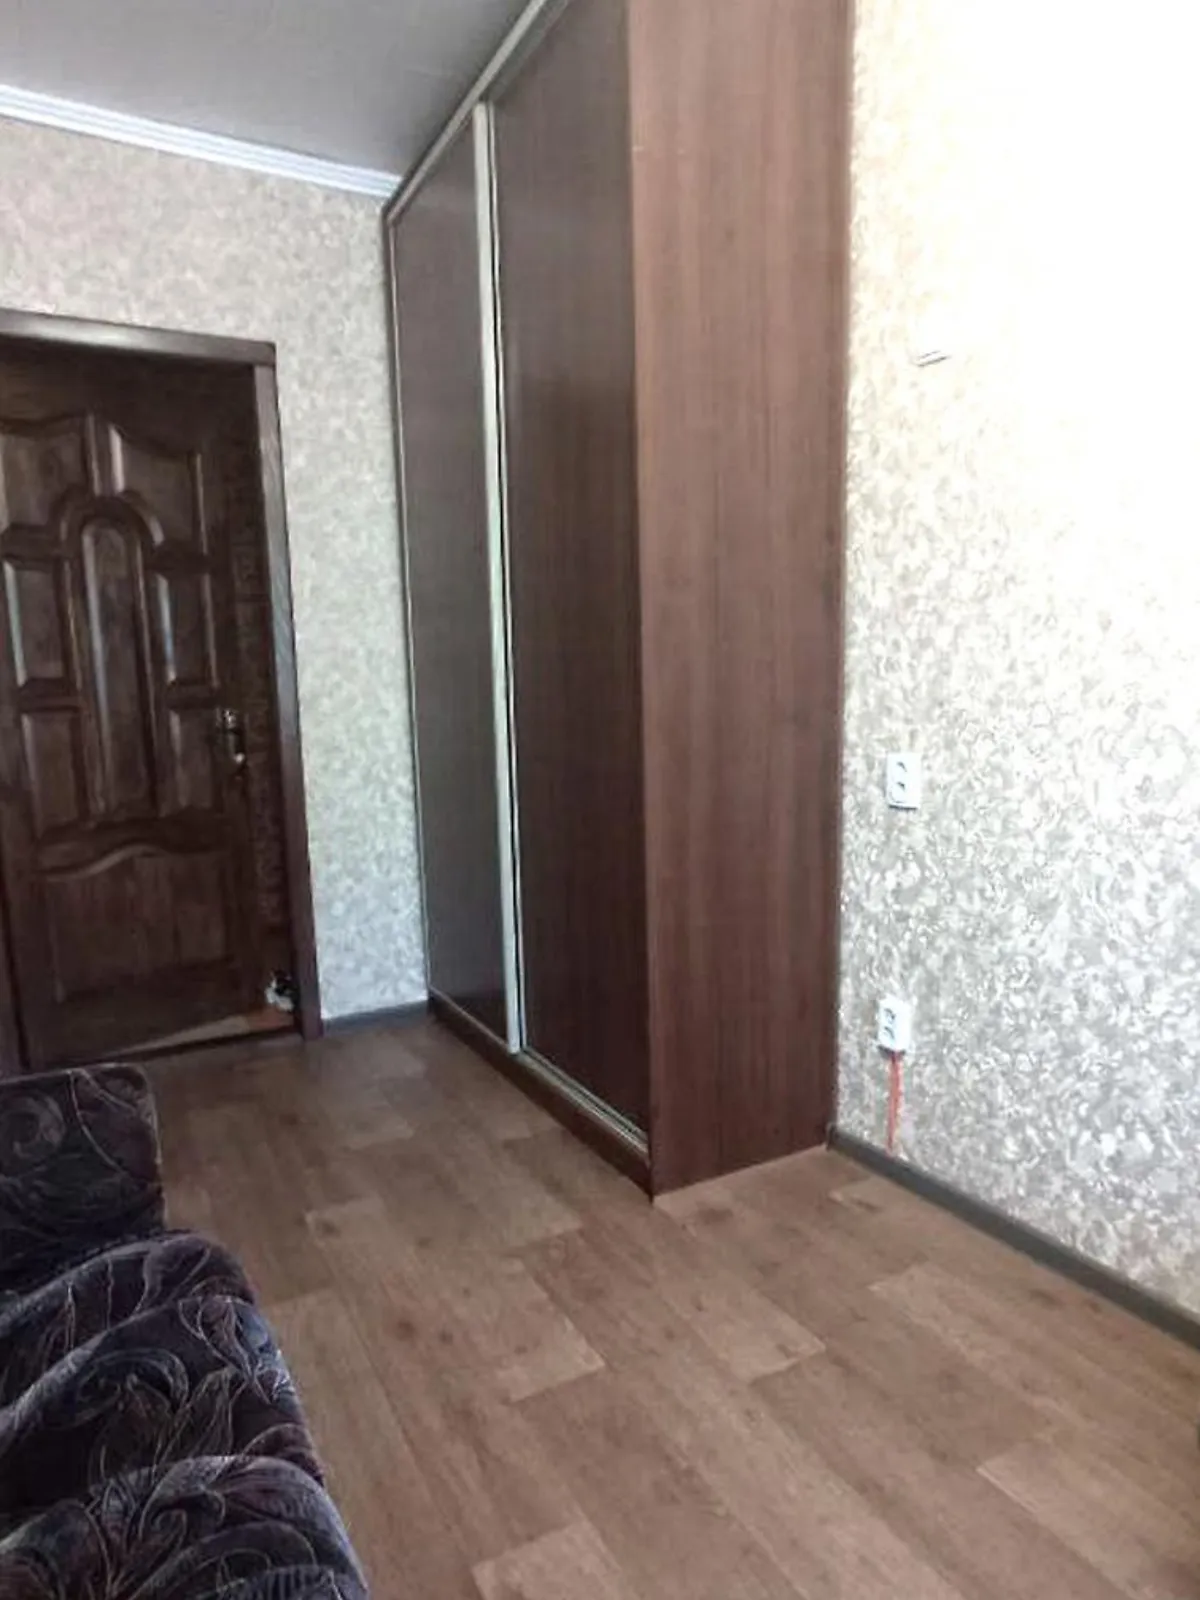 Продается комната 10 кв. м в Харькове - фото 2